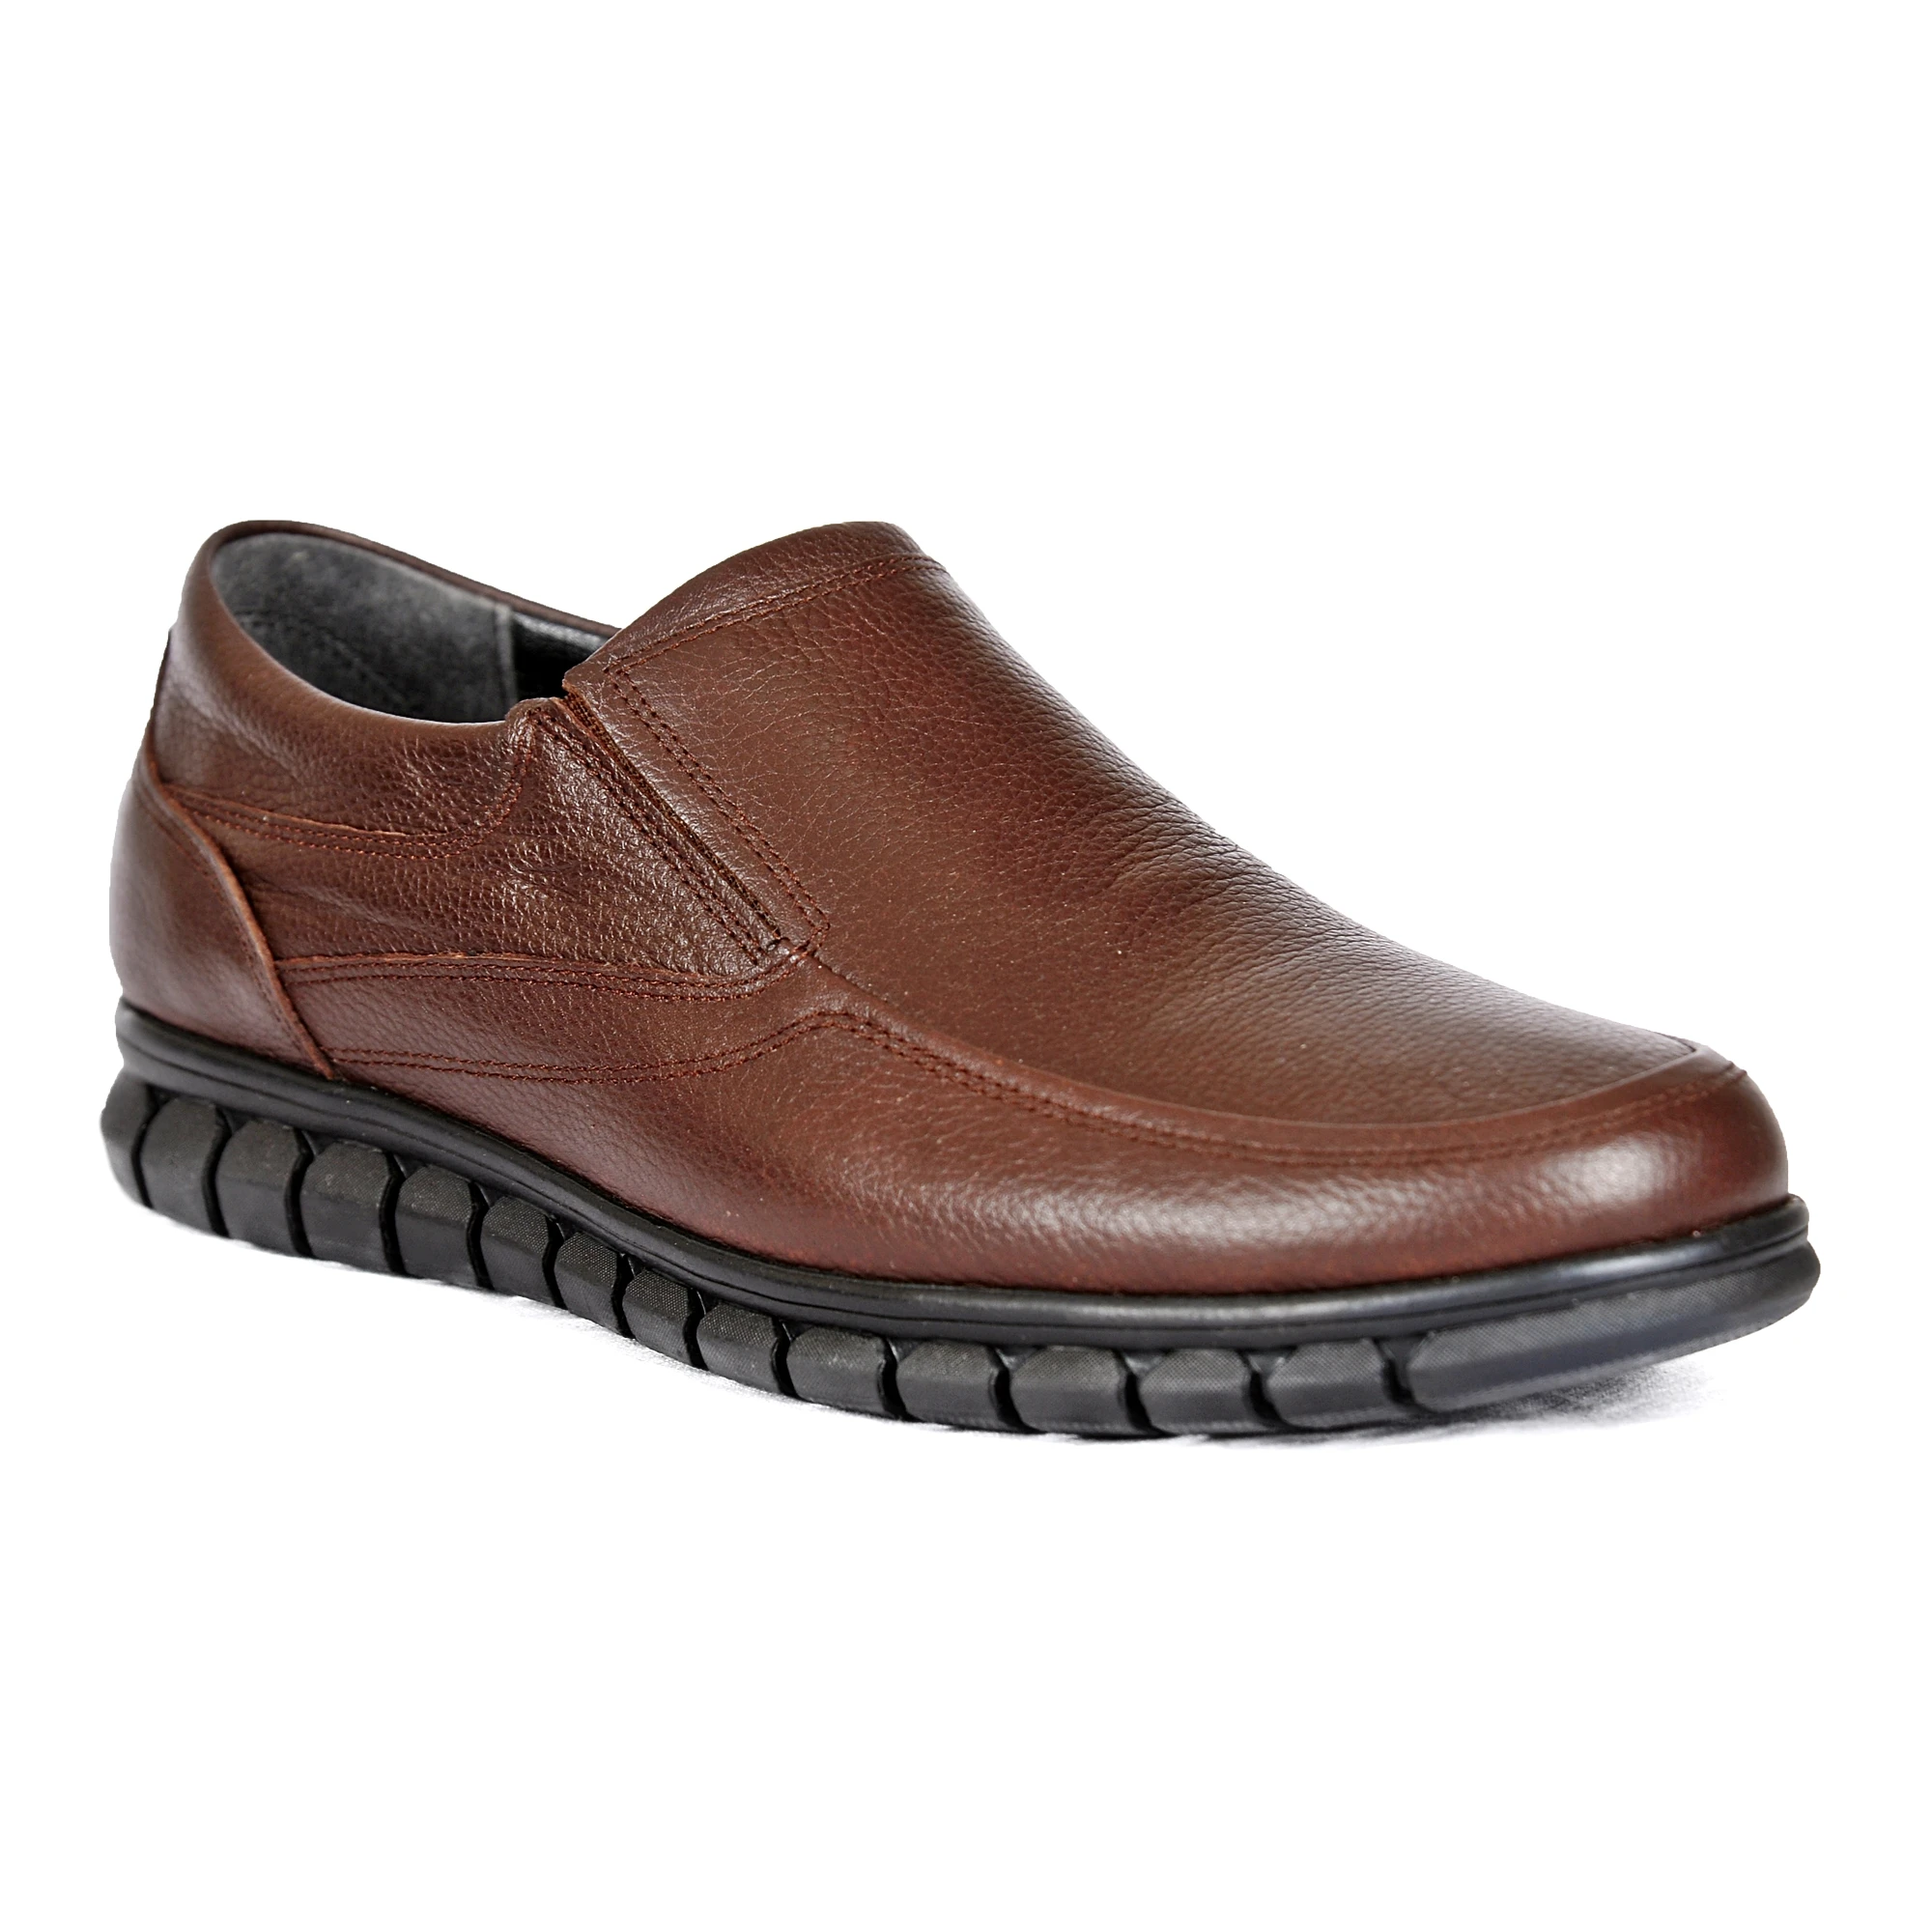 1982 Model Men s Winter Genuine Leather Shoes Dark Brown